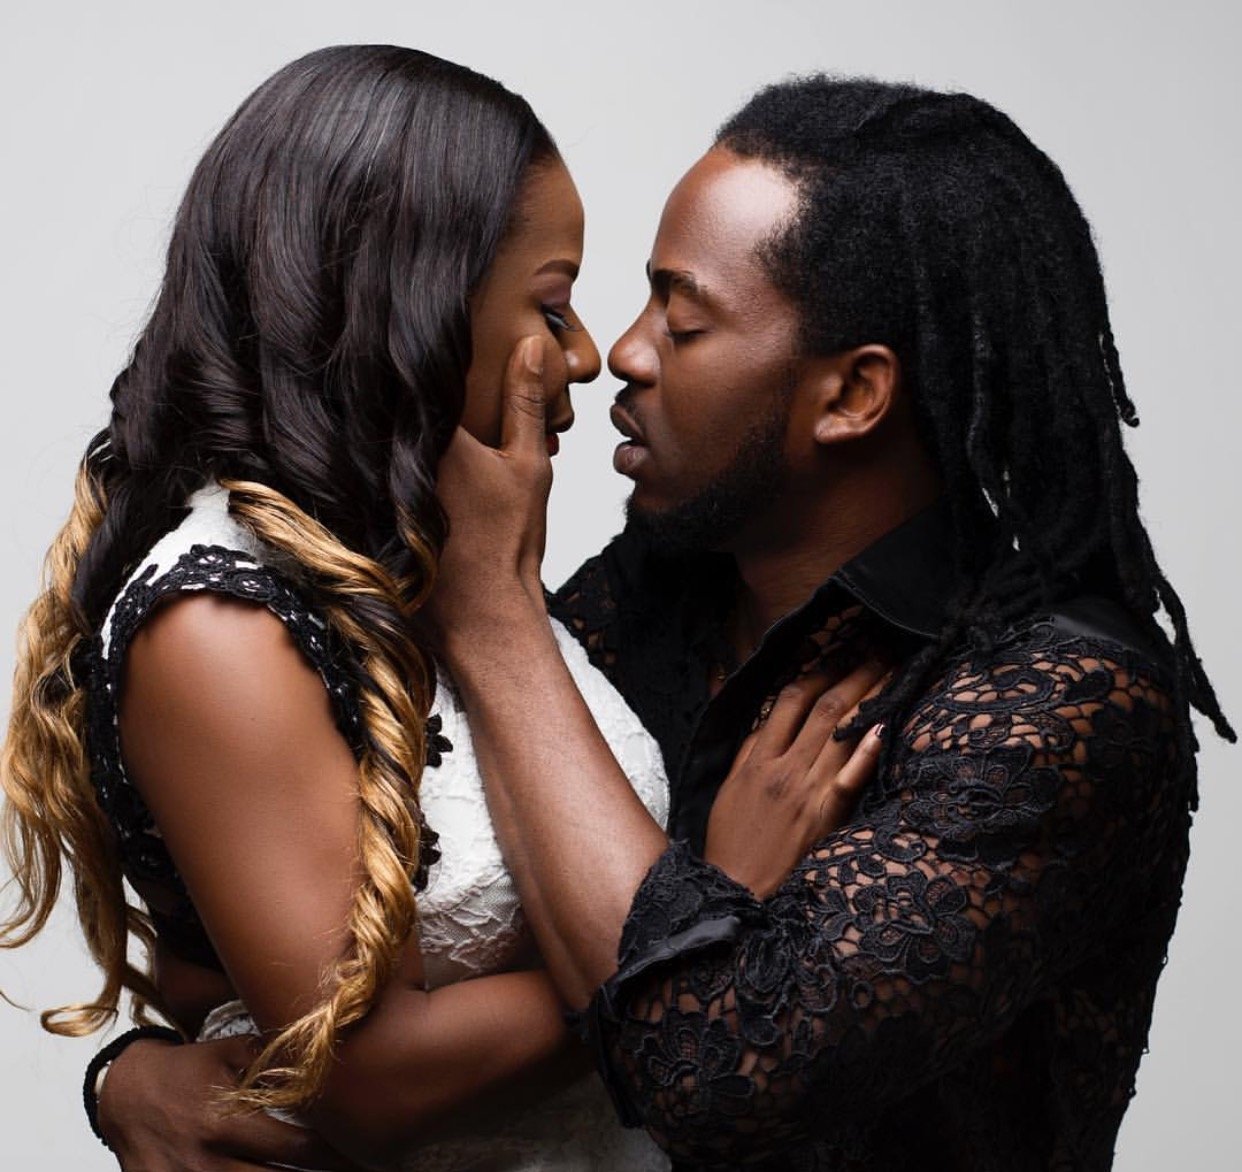 Has Singer Jaydee dumped her hunk Nigerian man after a few months of dating?